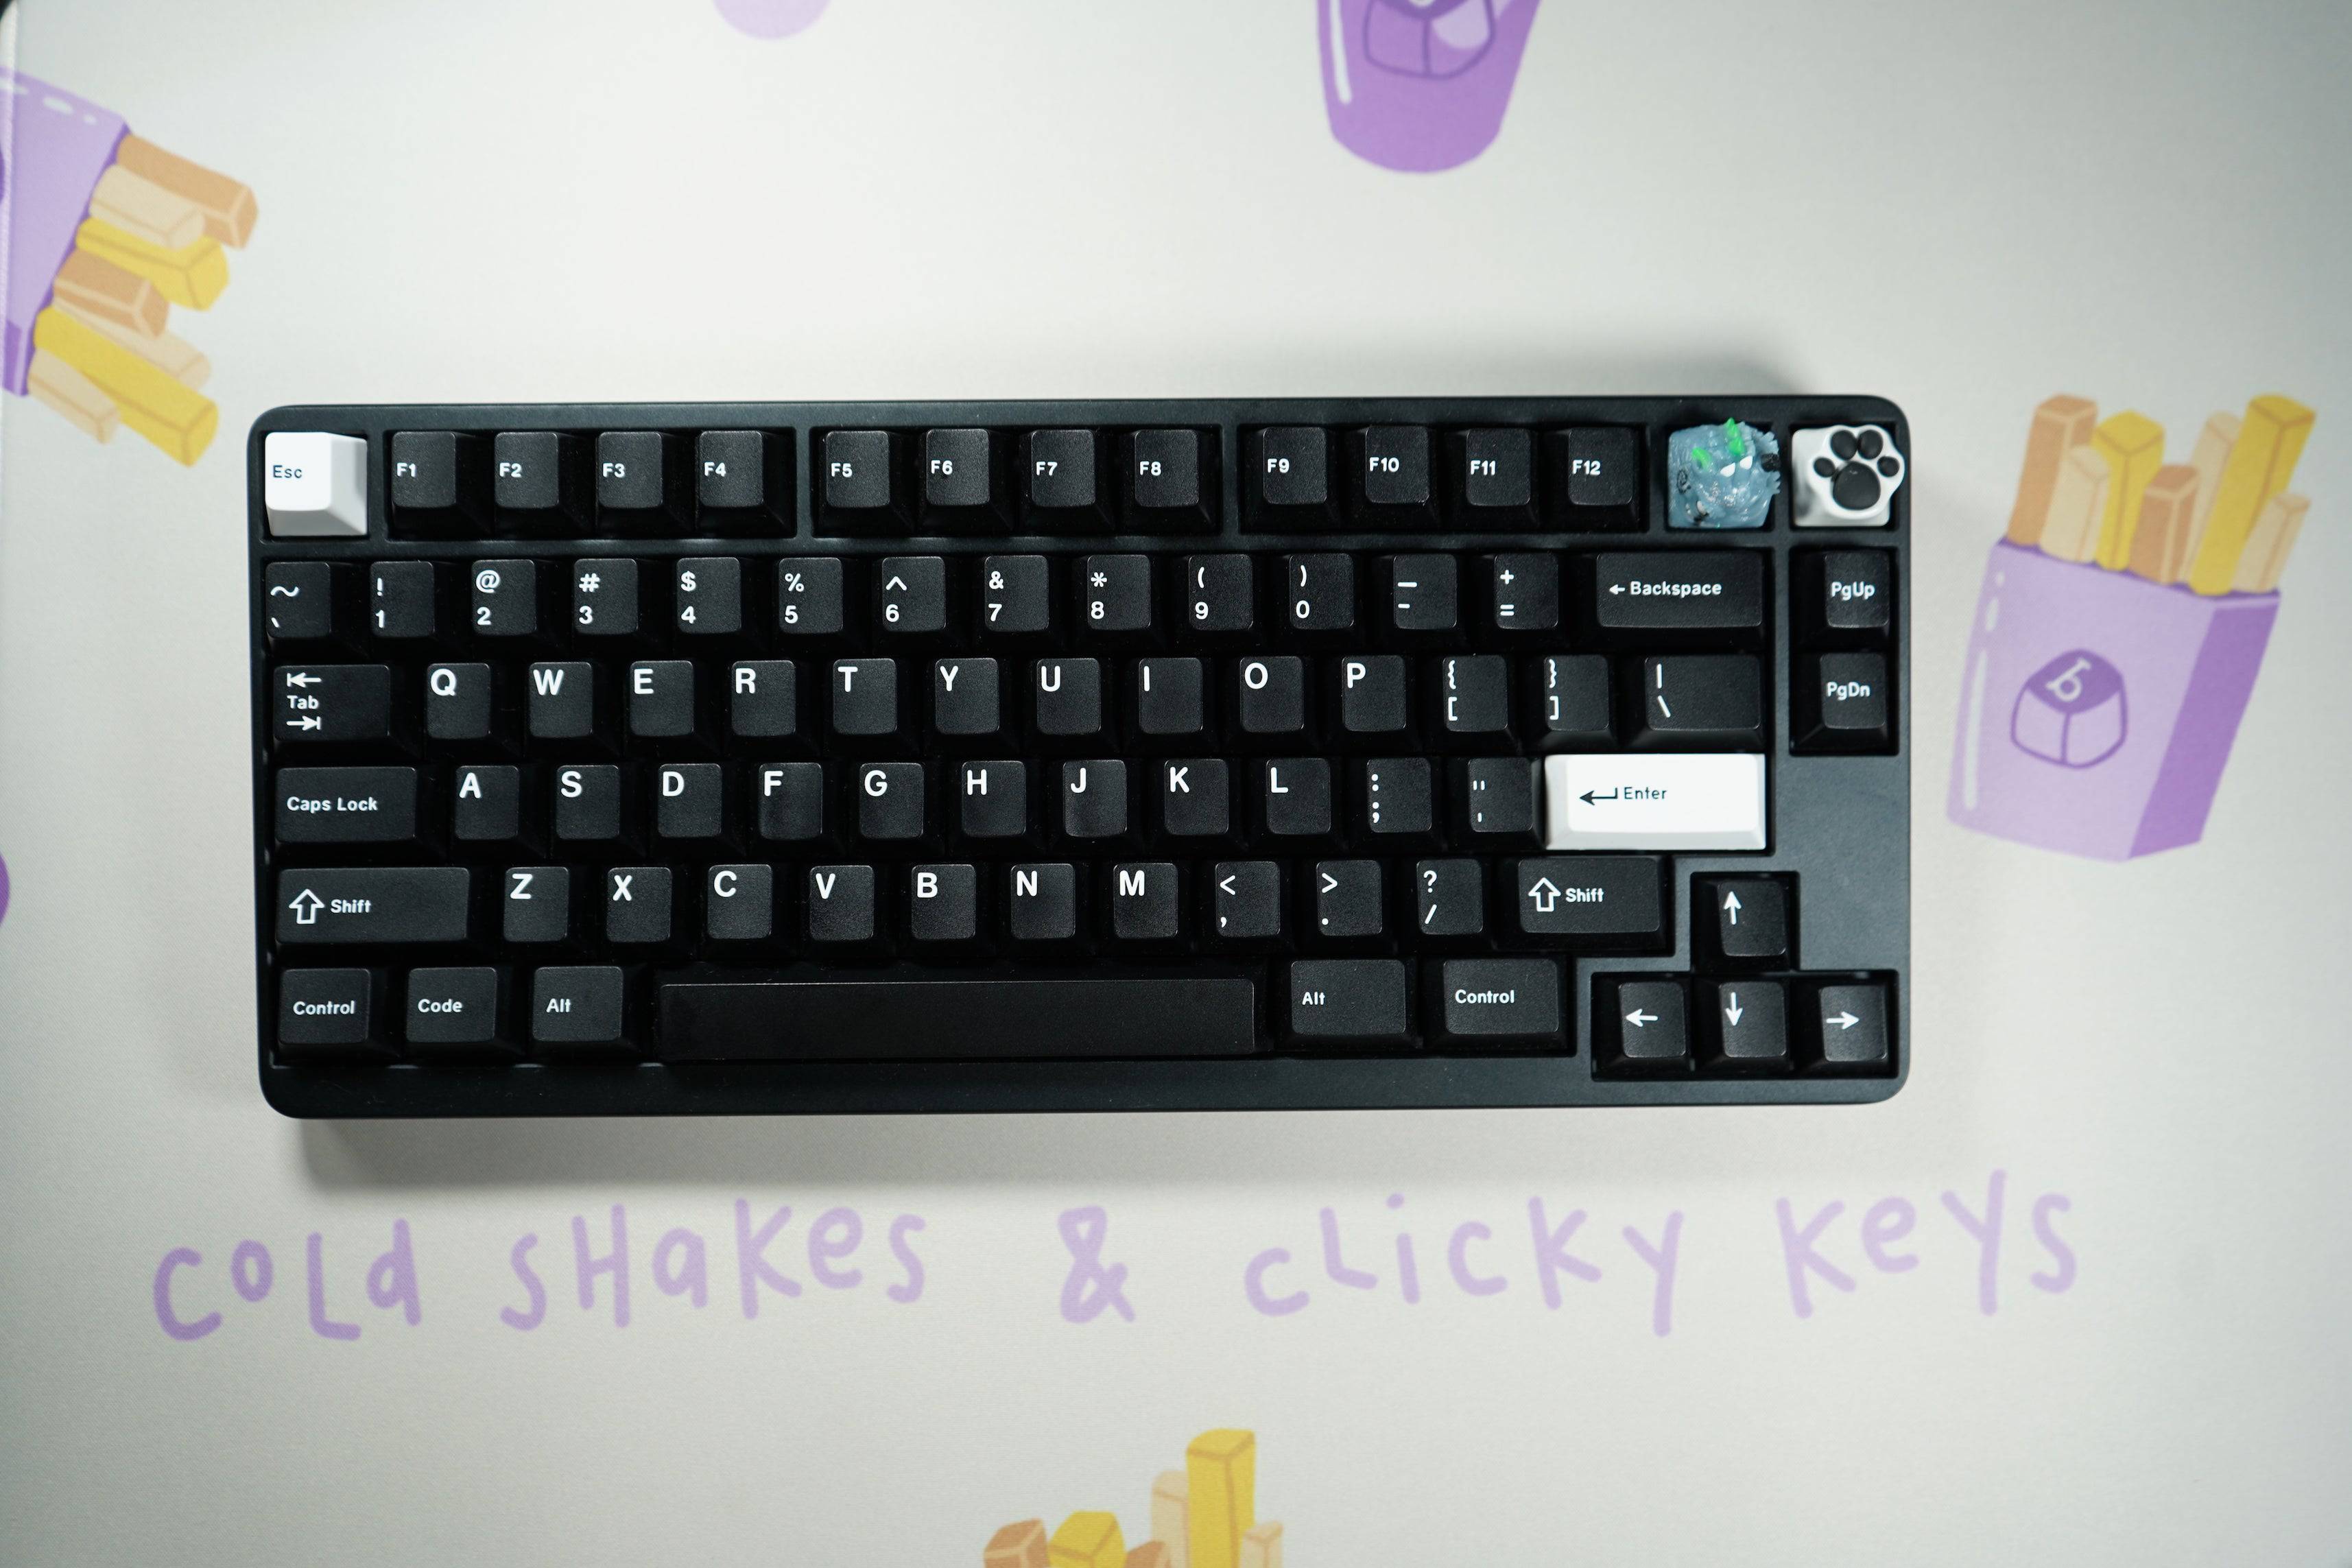 Cold Shakes & Clicky Keys Deskmats - KeebsForAll